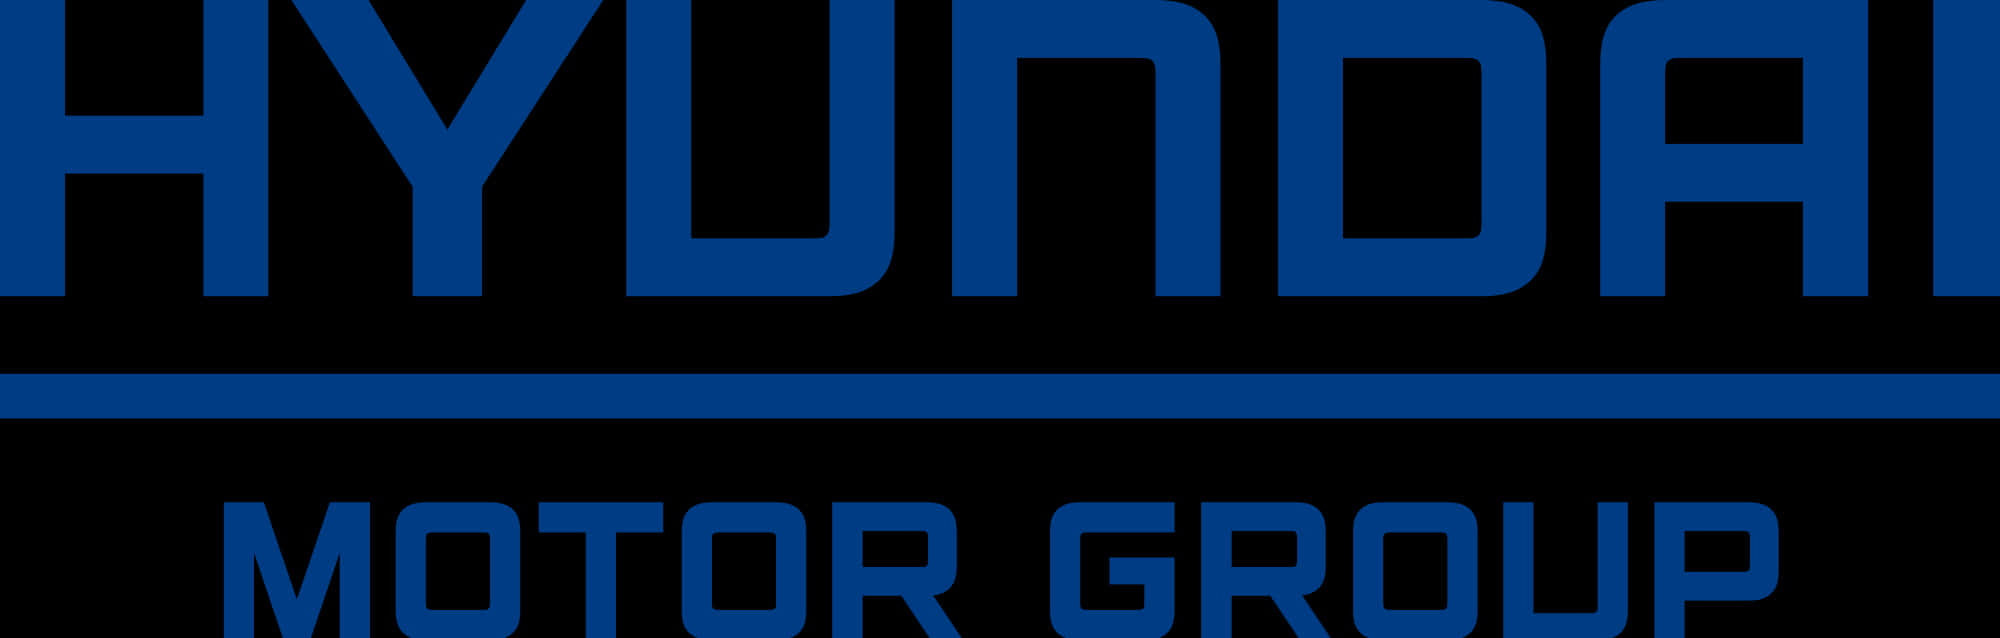 Hyundai Motor Group Logo